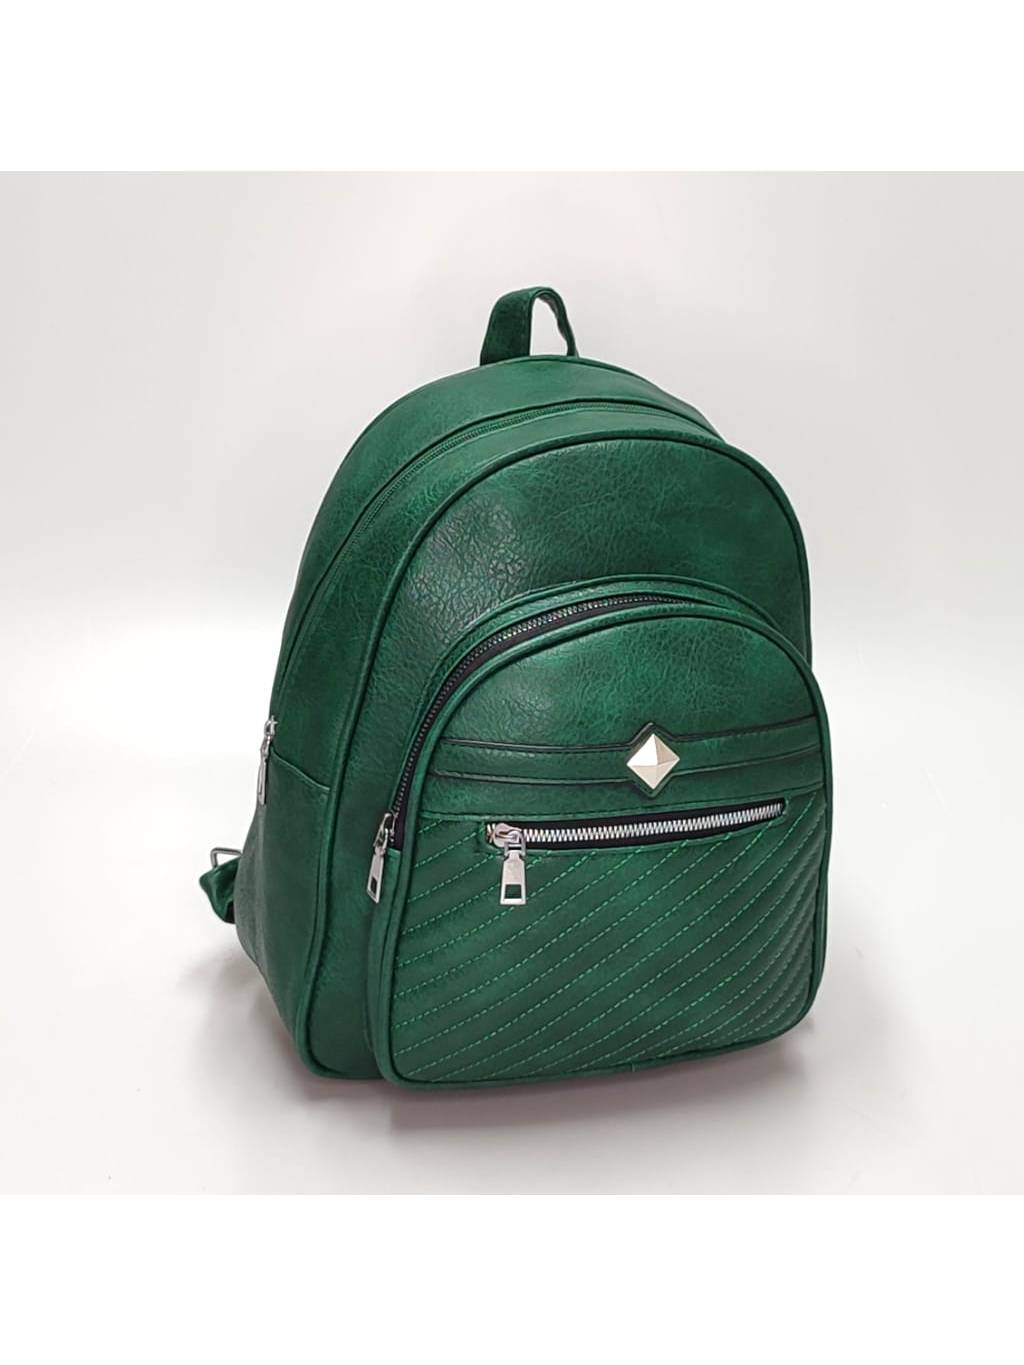 Dámsky ruksak 2574 zelený www.kabelky vypredaj (28)